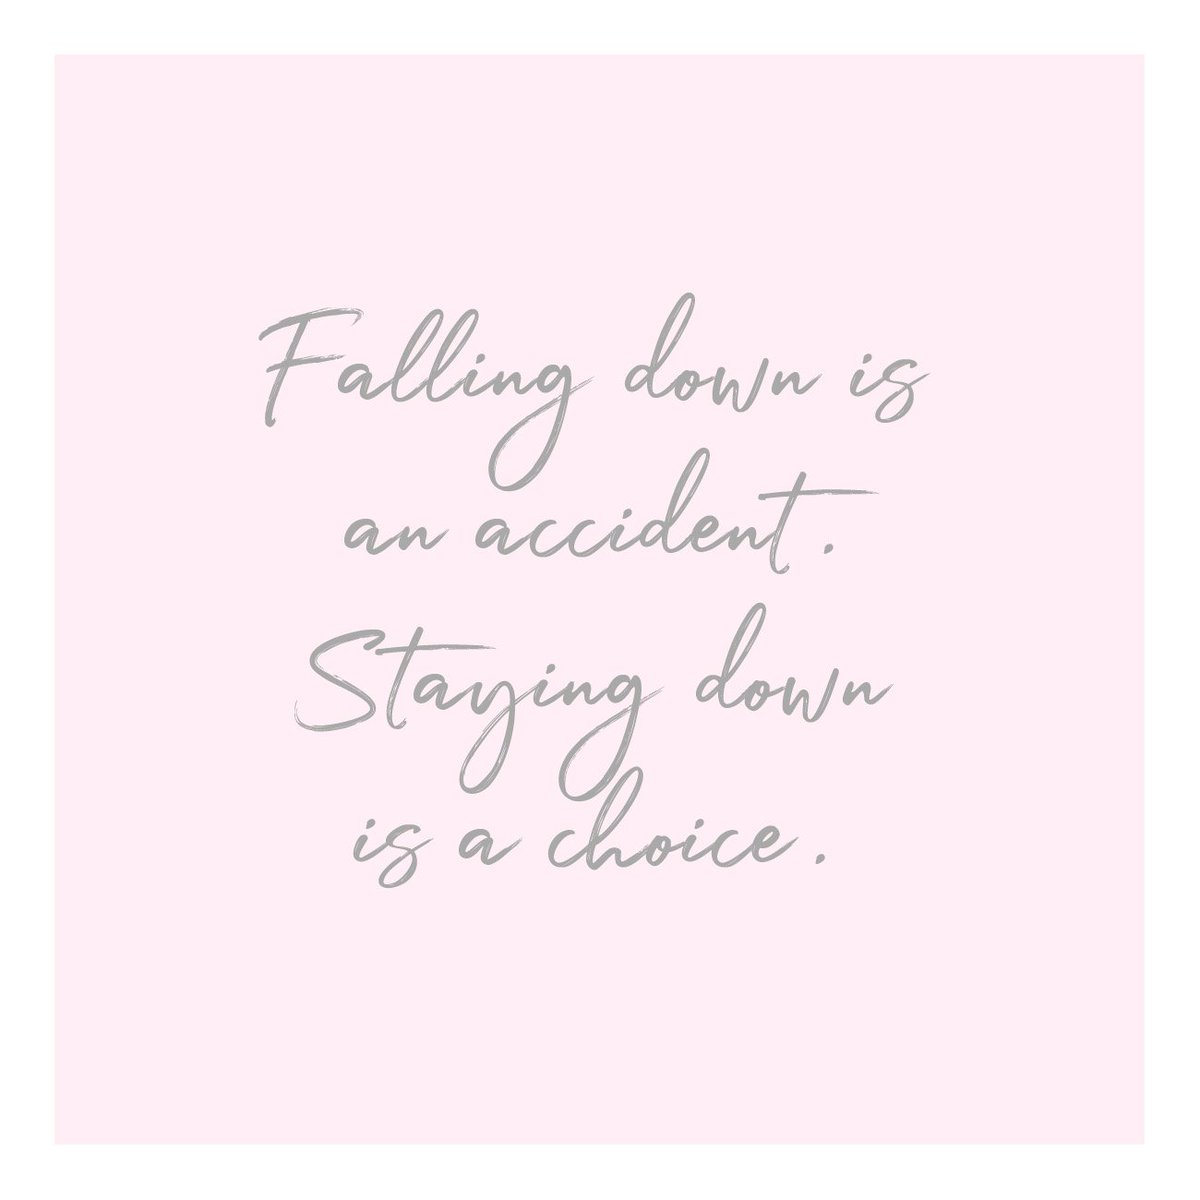 Falling down is an accident, staying down is a choice!

#quote #qotd #inspire #femaleboss #femalemotivation #girlpower #skincare #aesthetics #beautyhack #bblogger #health #healthy #inspiration #motivation #coolsculpting #expert #aestheticclinic #London #miltonkeynes #harleystreet